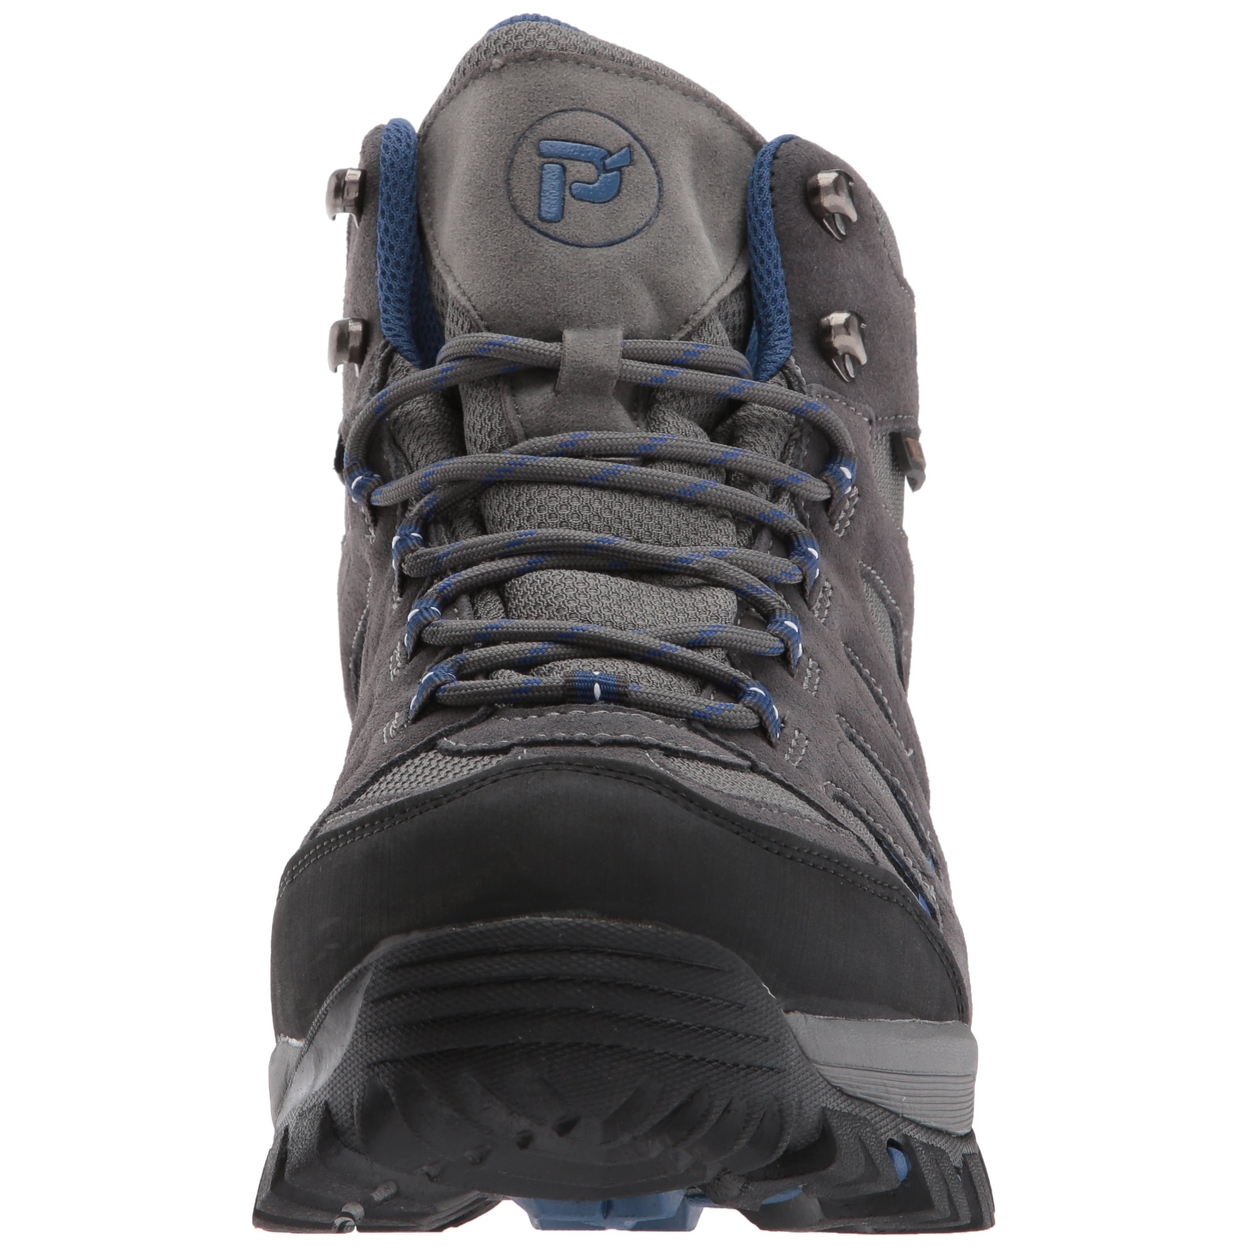 Propet Men's Ridge Walker Hiking Boot Grey/Blue - M3599GRB GREY/BLUE - GREY/BLUE, 9-2E